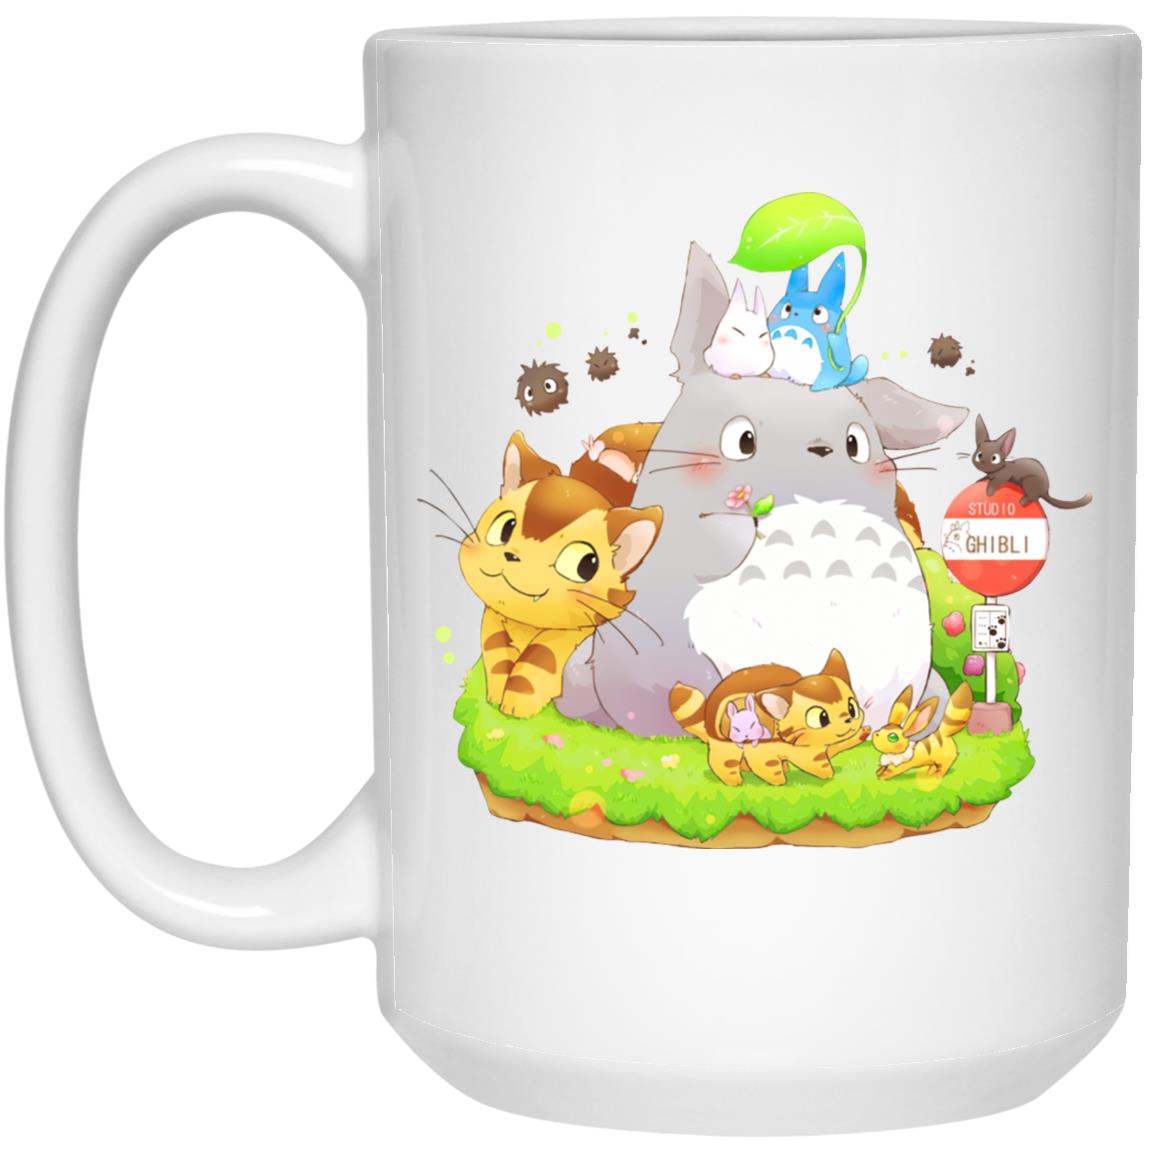 Totoro Family and The Cat Bus Mug